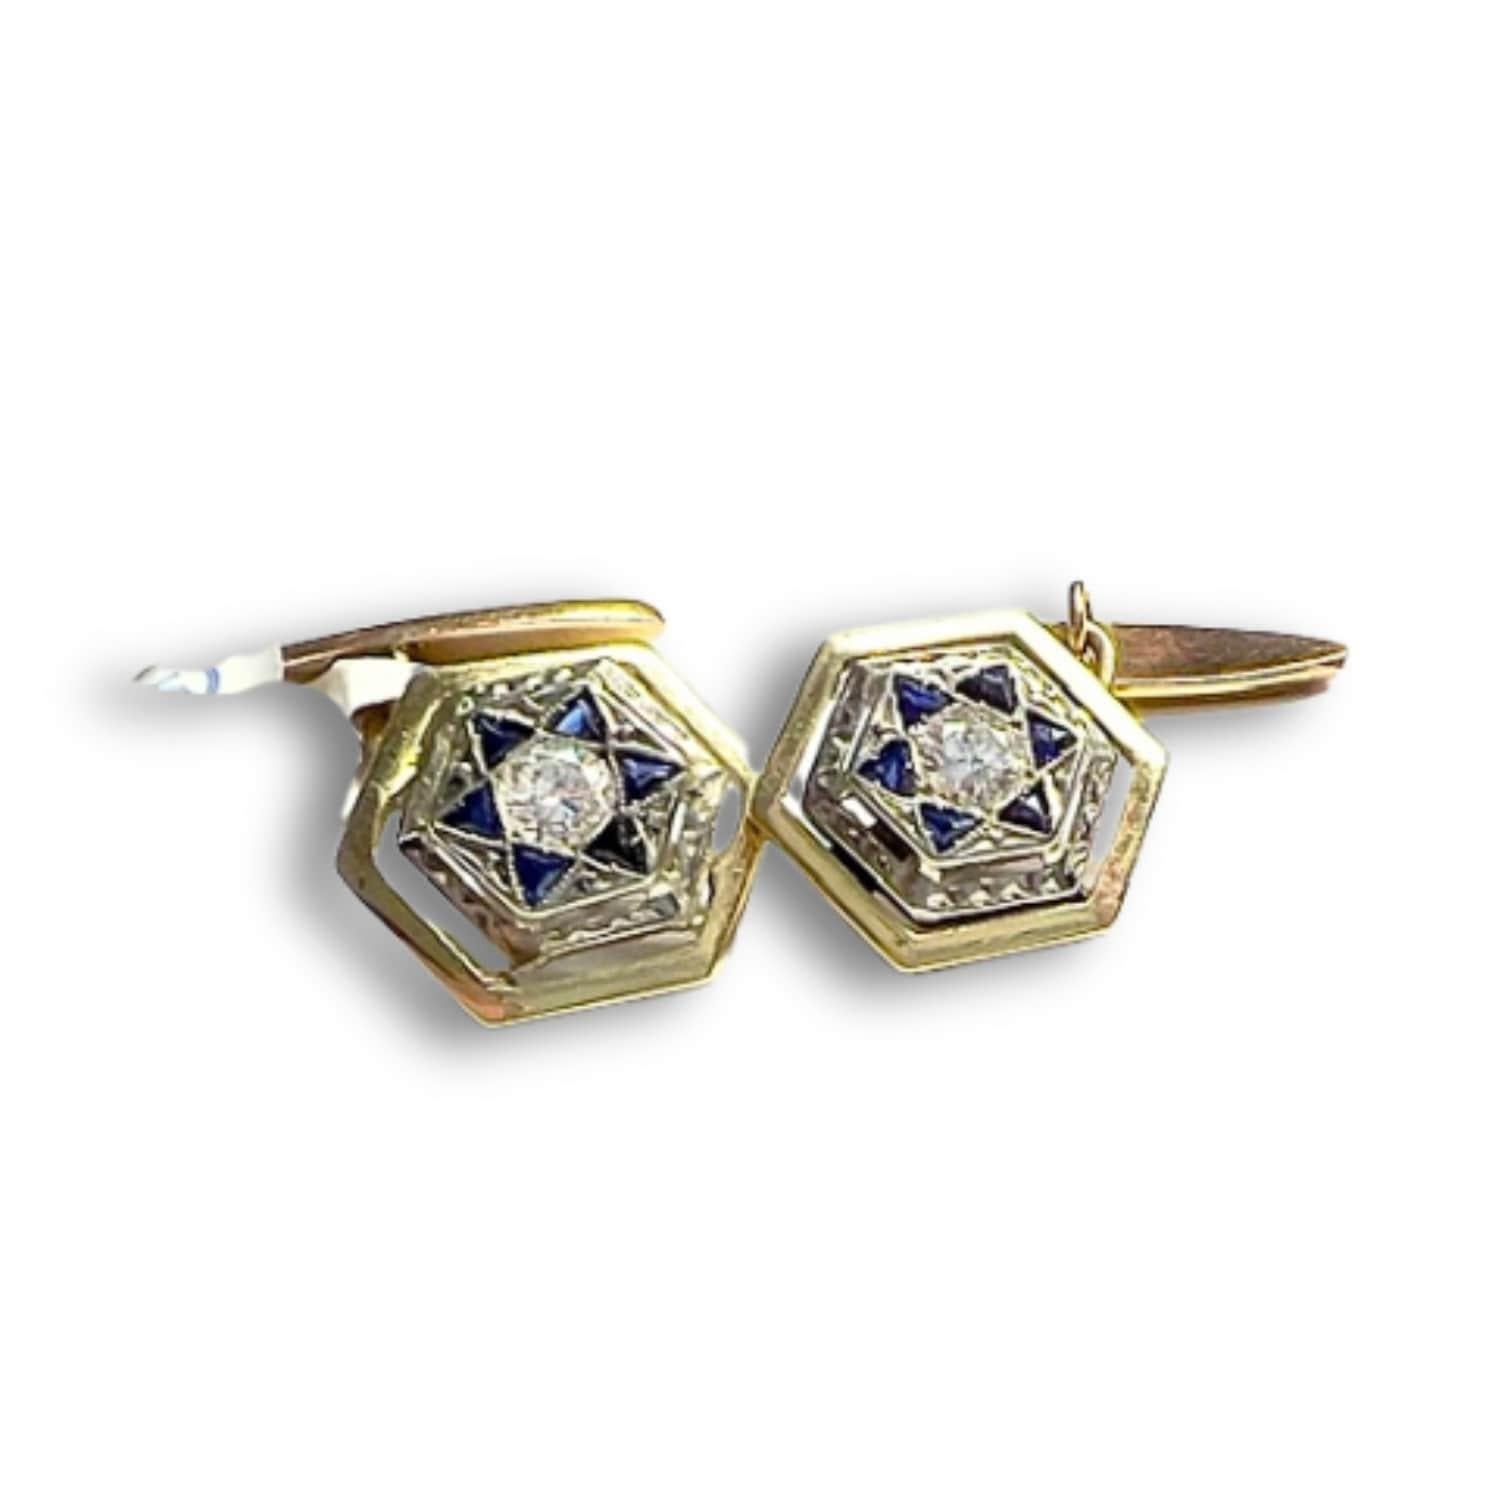 Brilliant Cut Art Deco Period Diamond and Sapphire in 18k Gold and Platinum Cufflinks For Sale